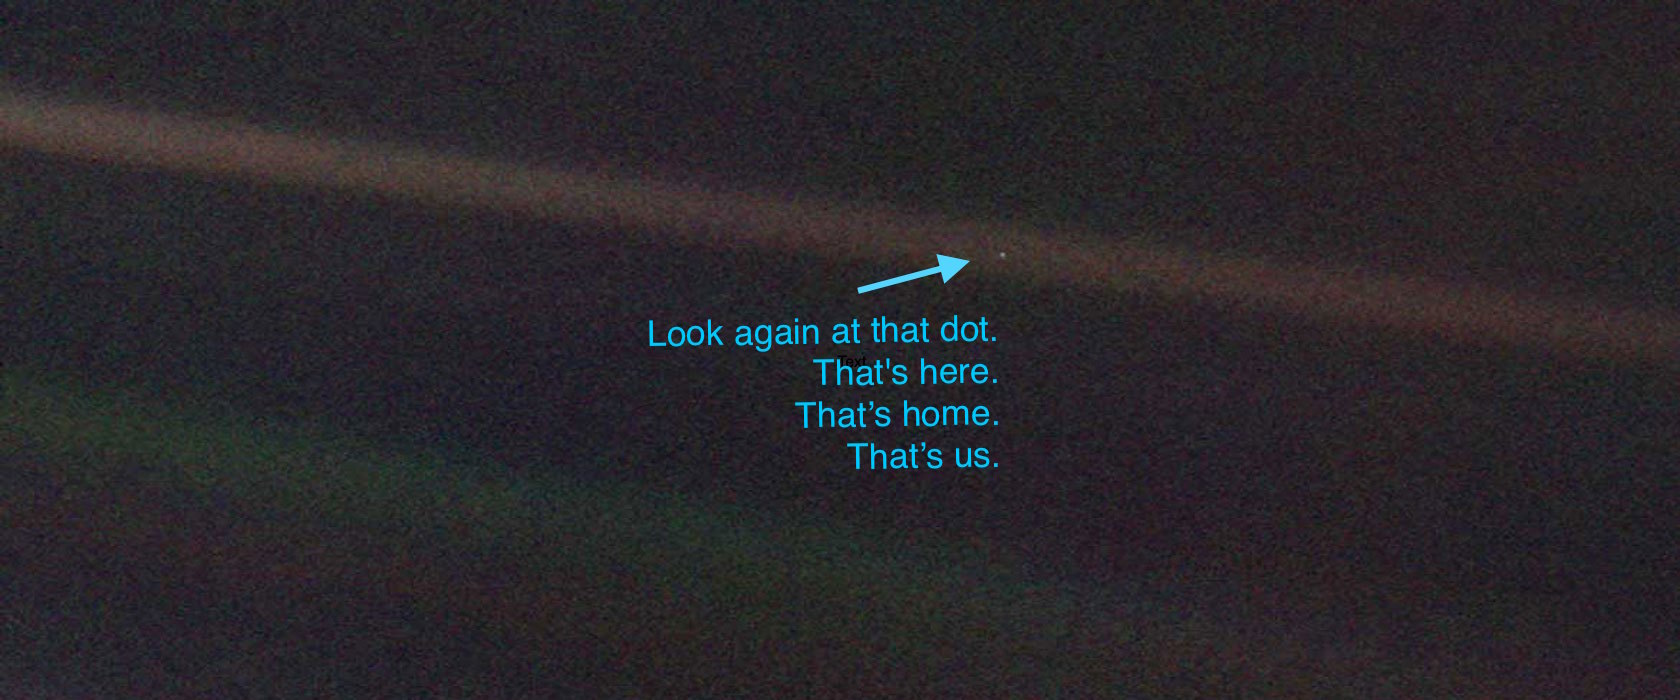 Carl Sagan's Pale Blue Dot Speech Is 26 Years Old